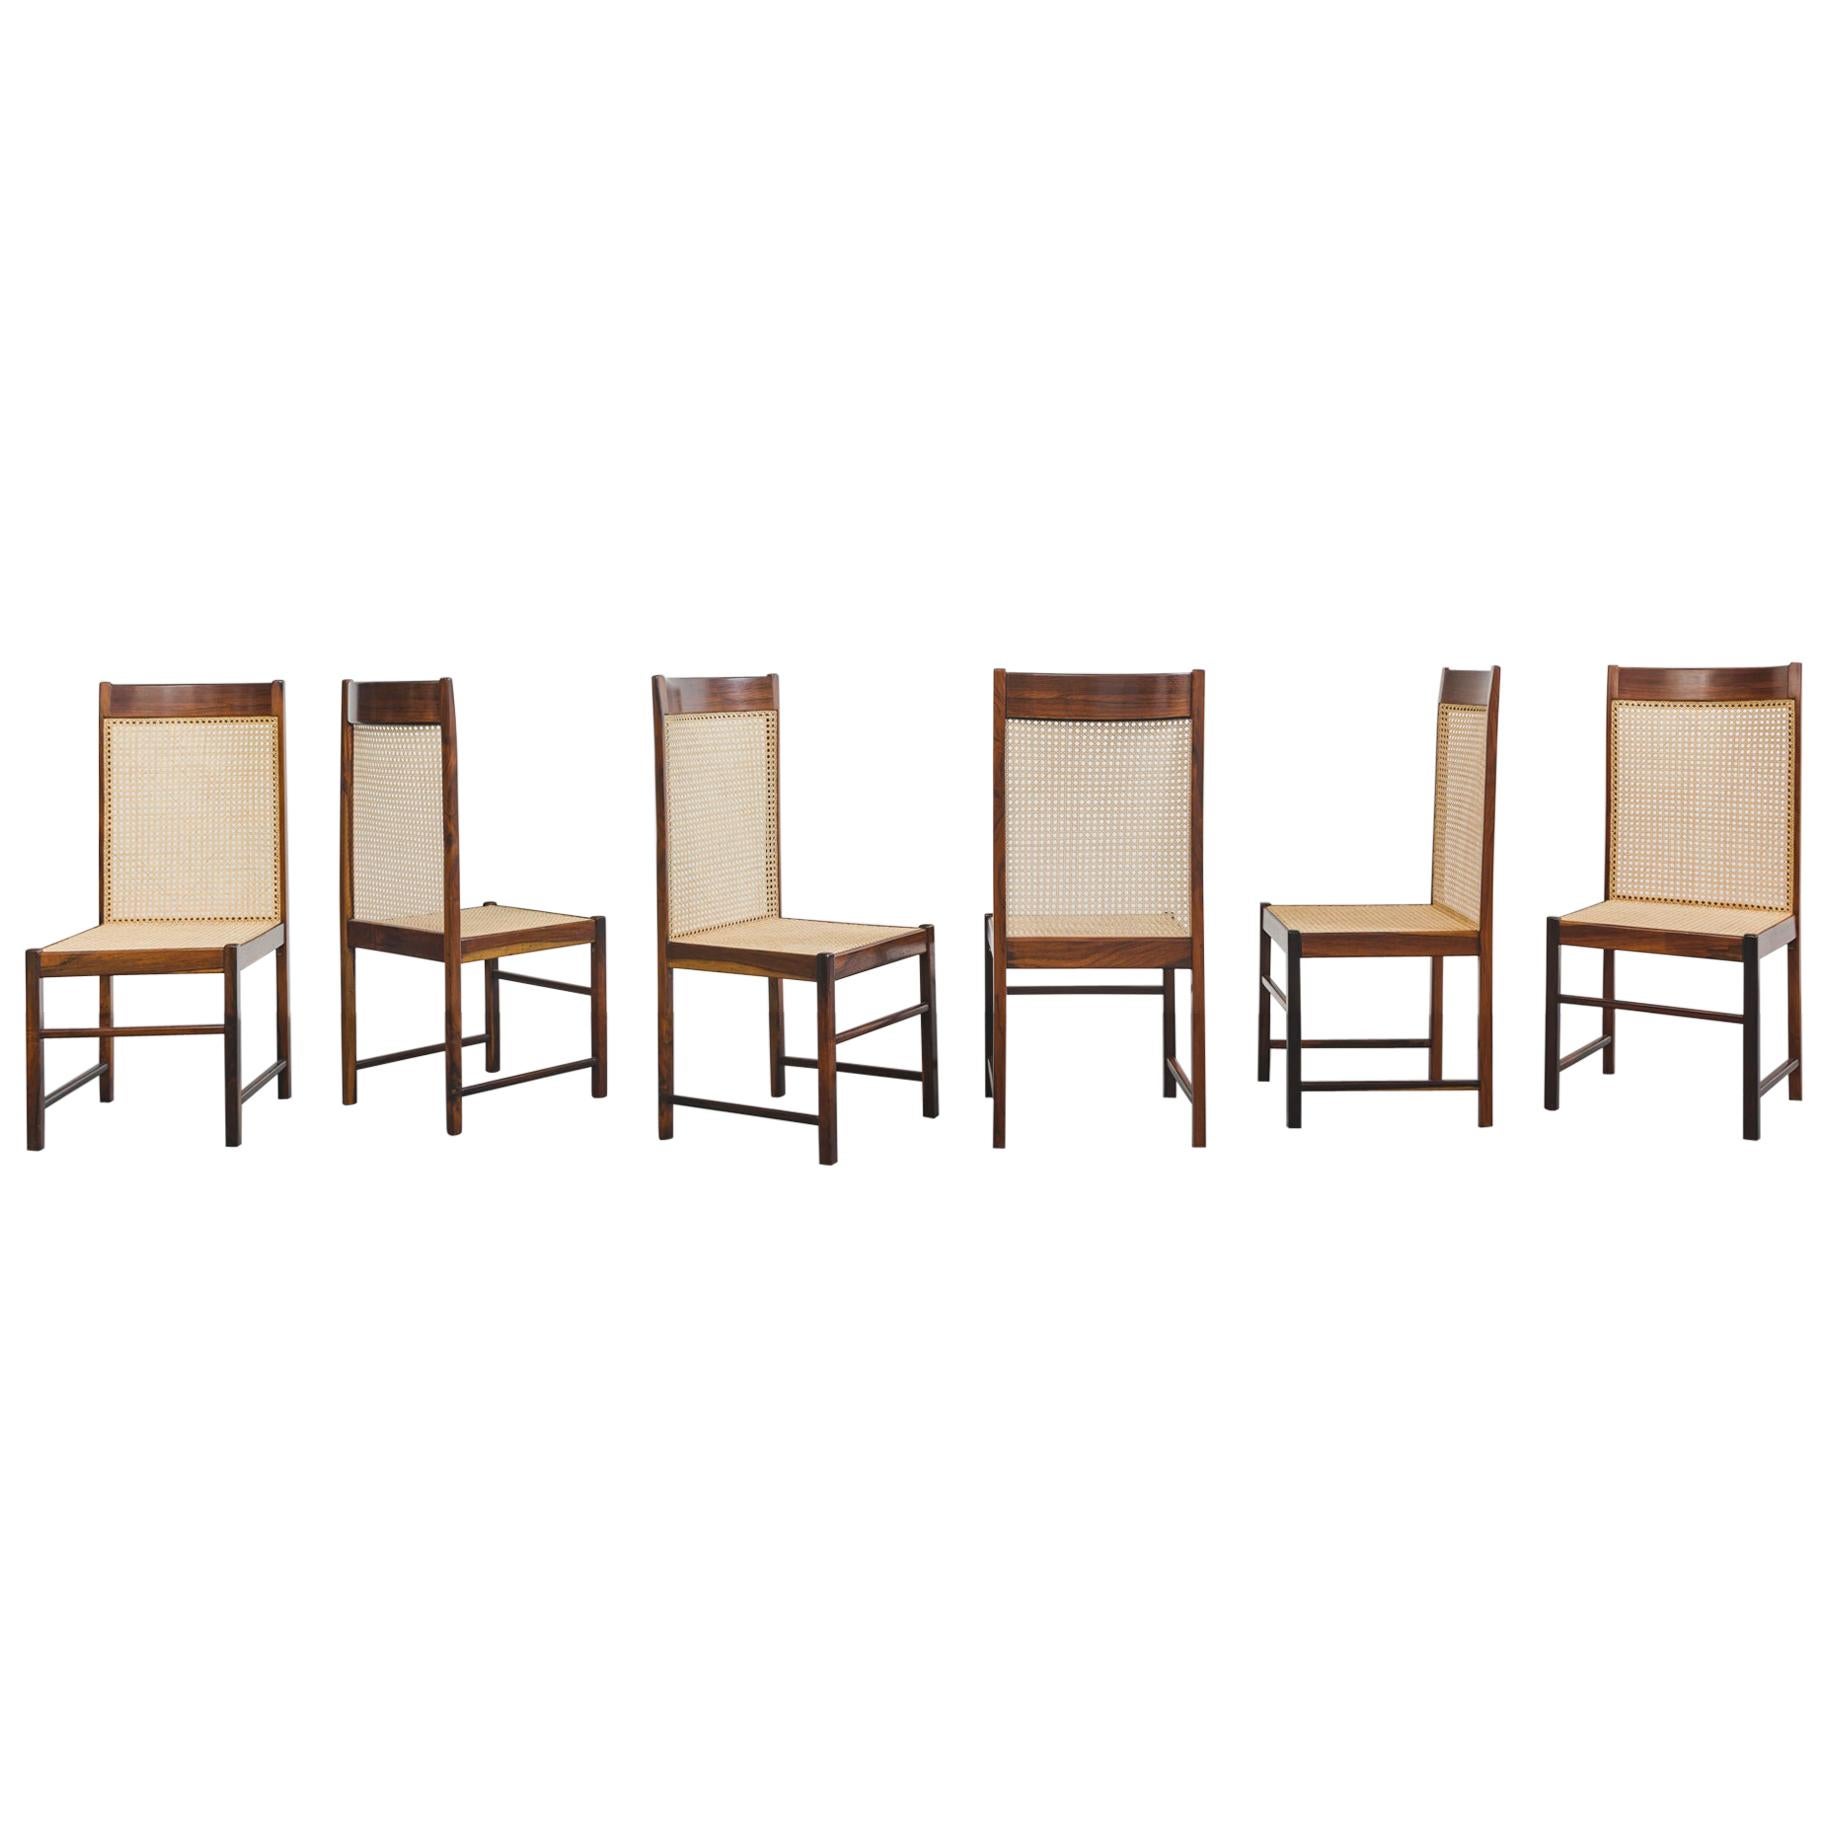 Brazilian Rosewood Chairs by FAI 'Fatima Arquitetura Interiores', Midcentury